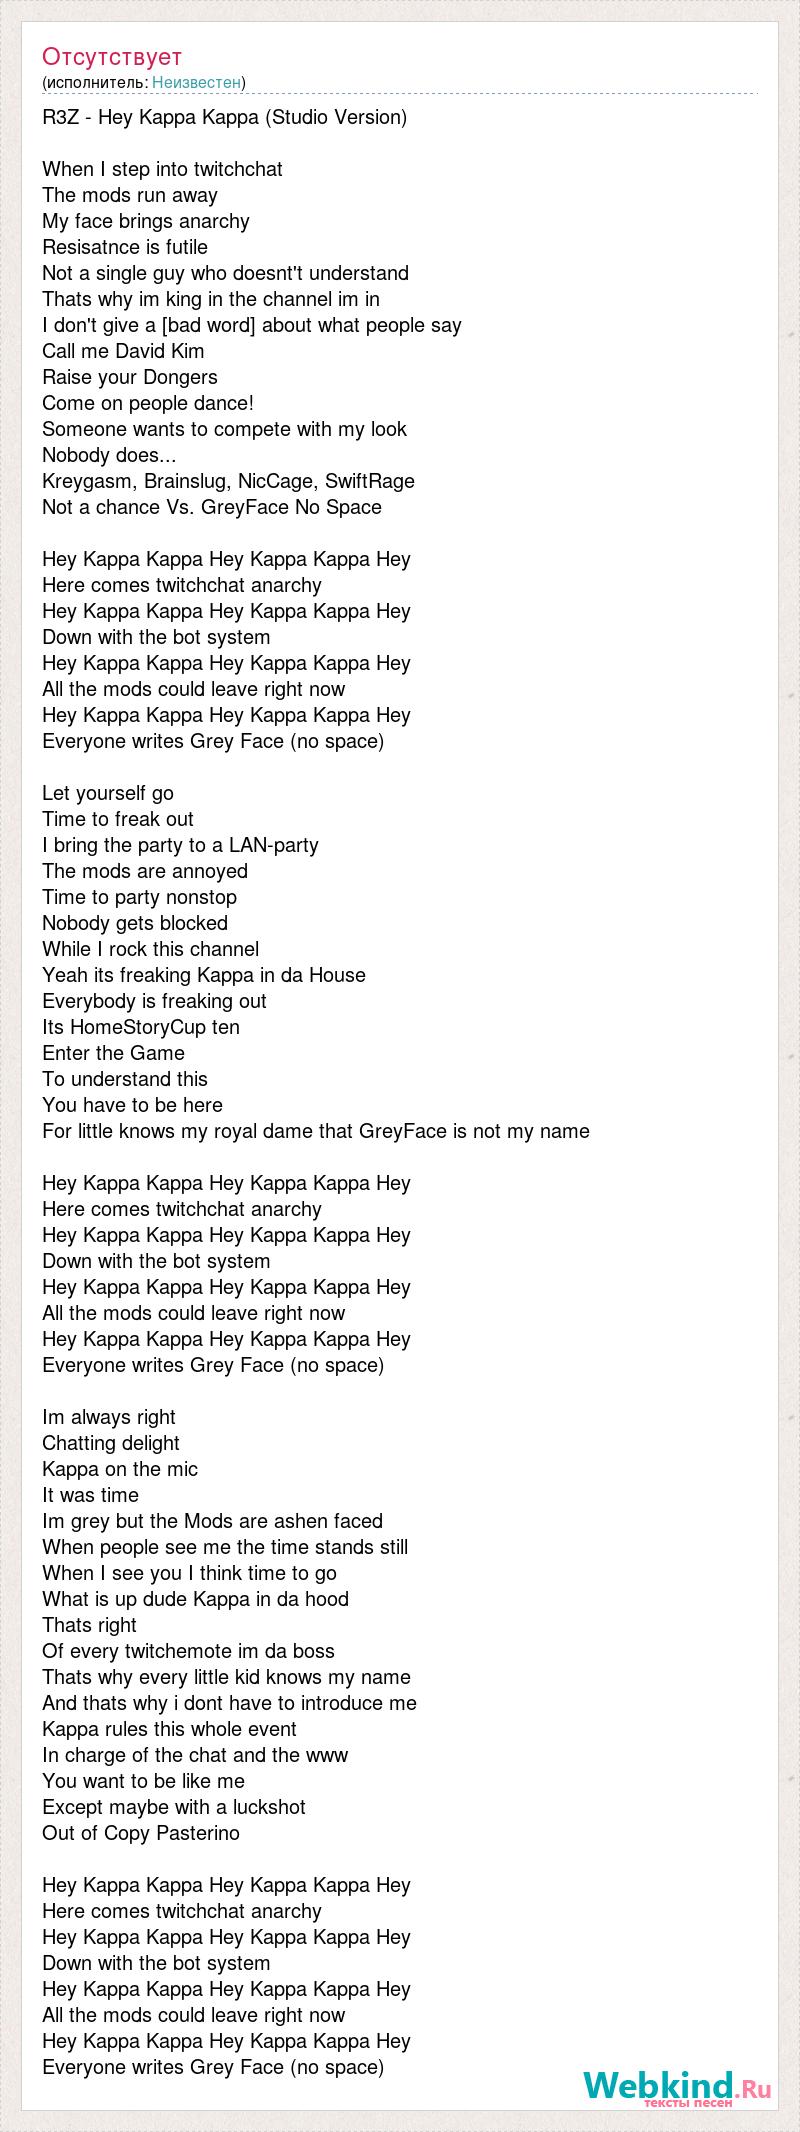 vogel verhaal breken Текст песни R3Z - Hey Kappa Kappa (Studio Version), слова песни